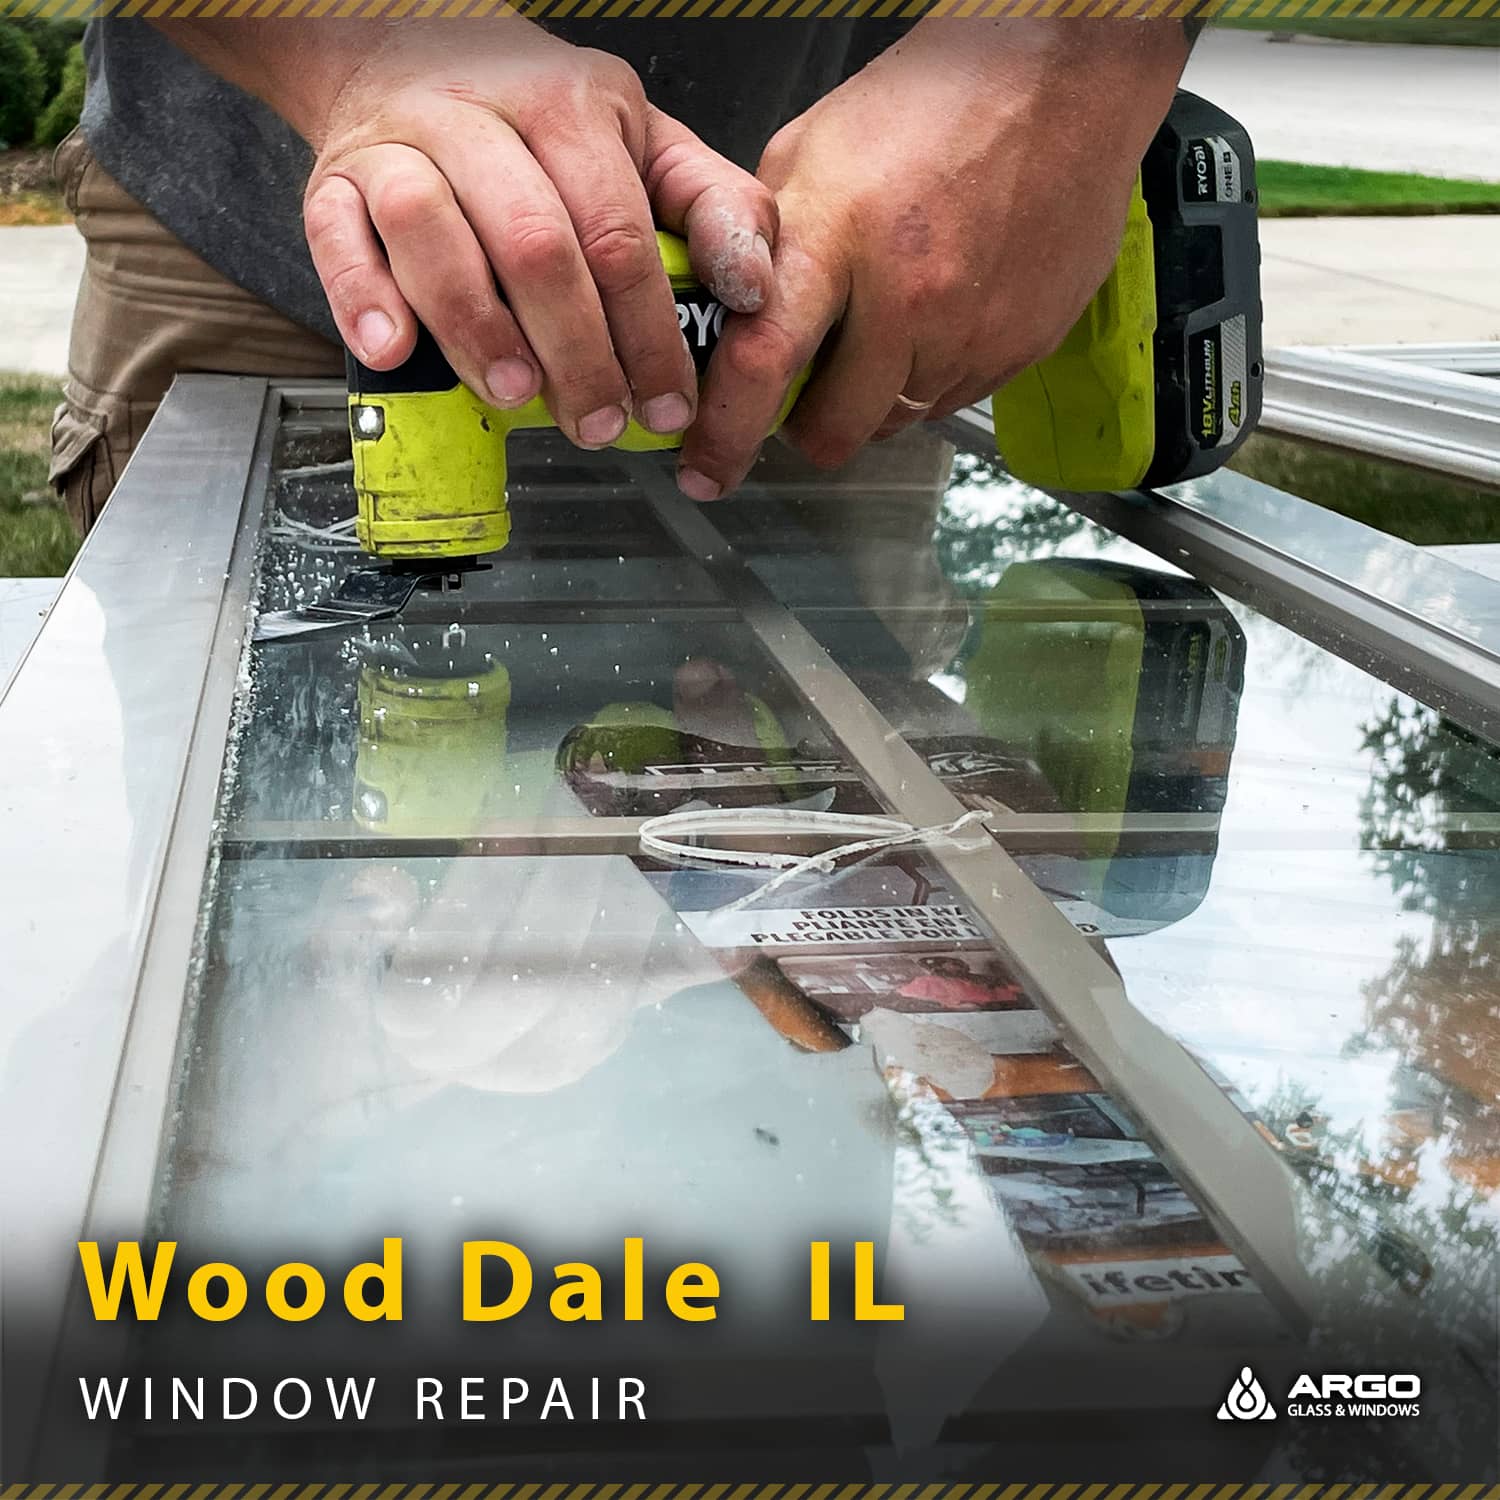 Professional Window Repair company